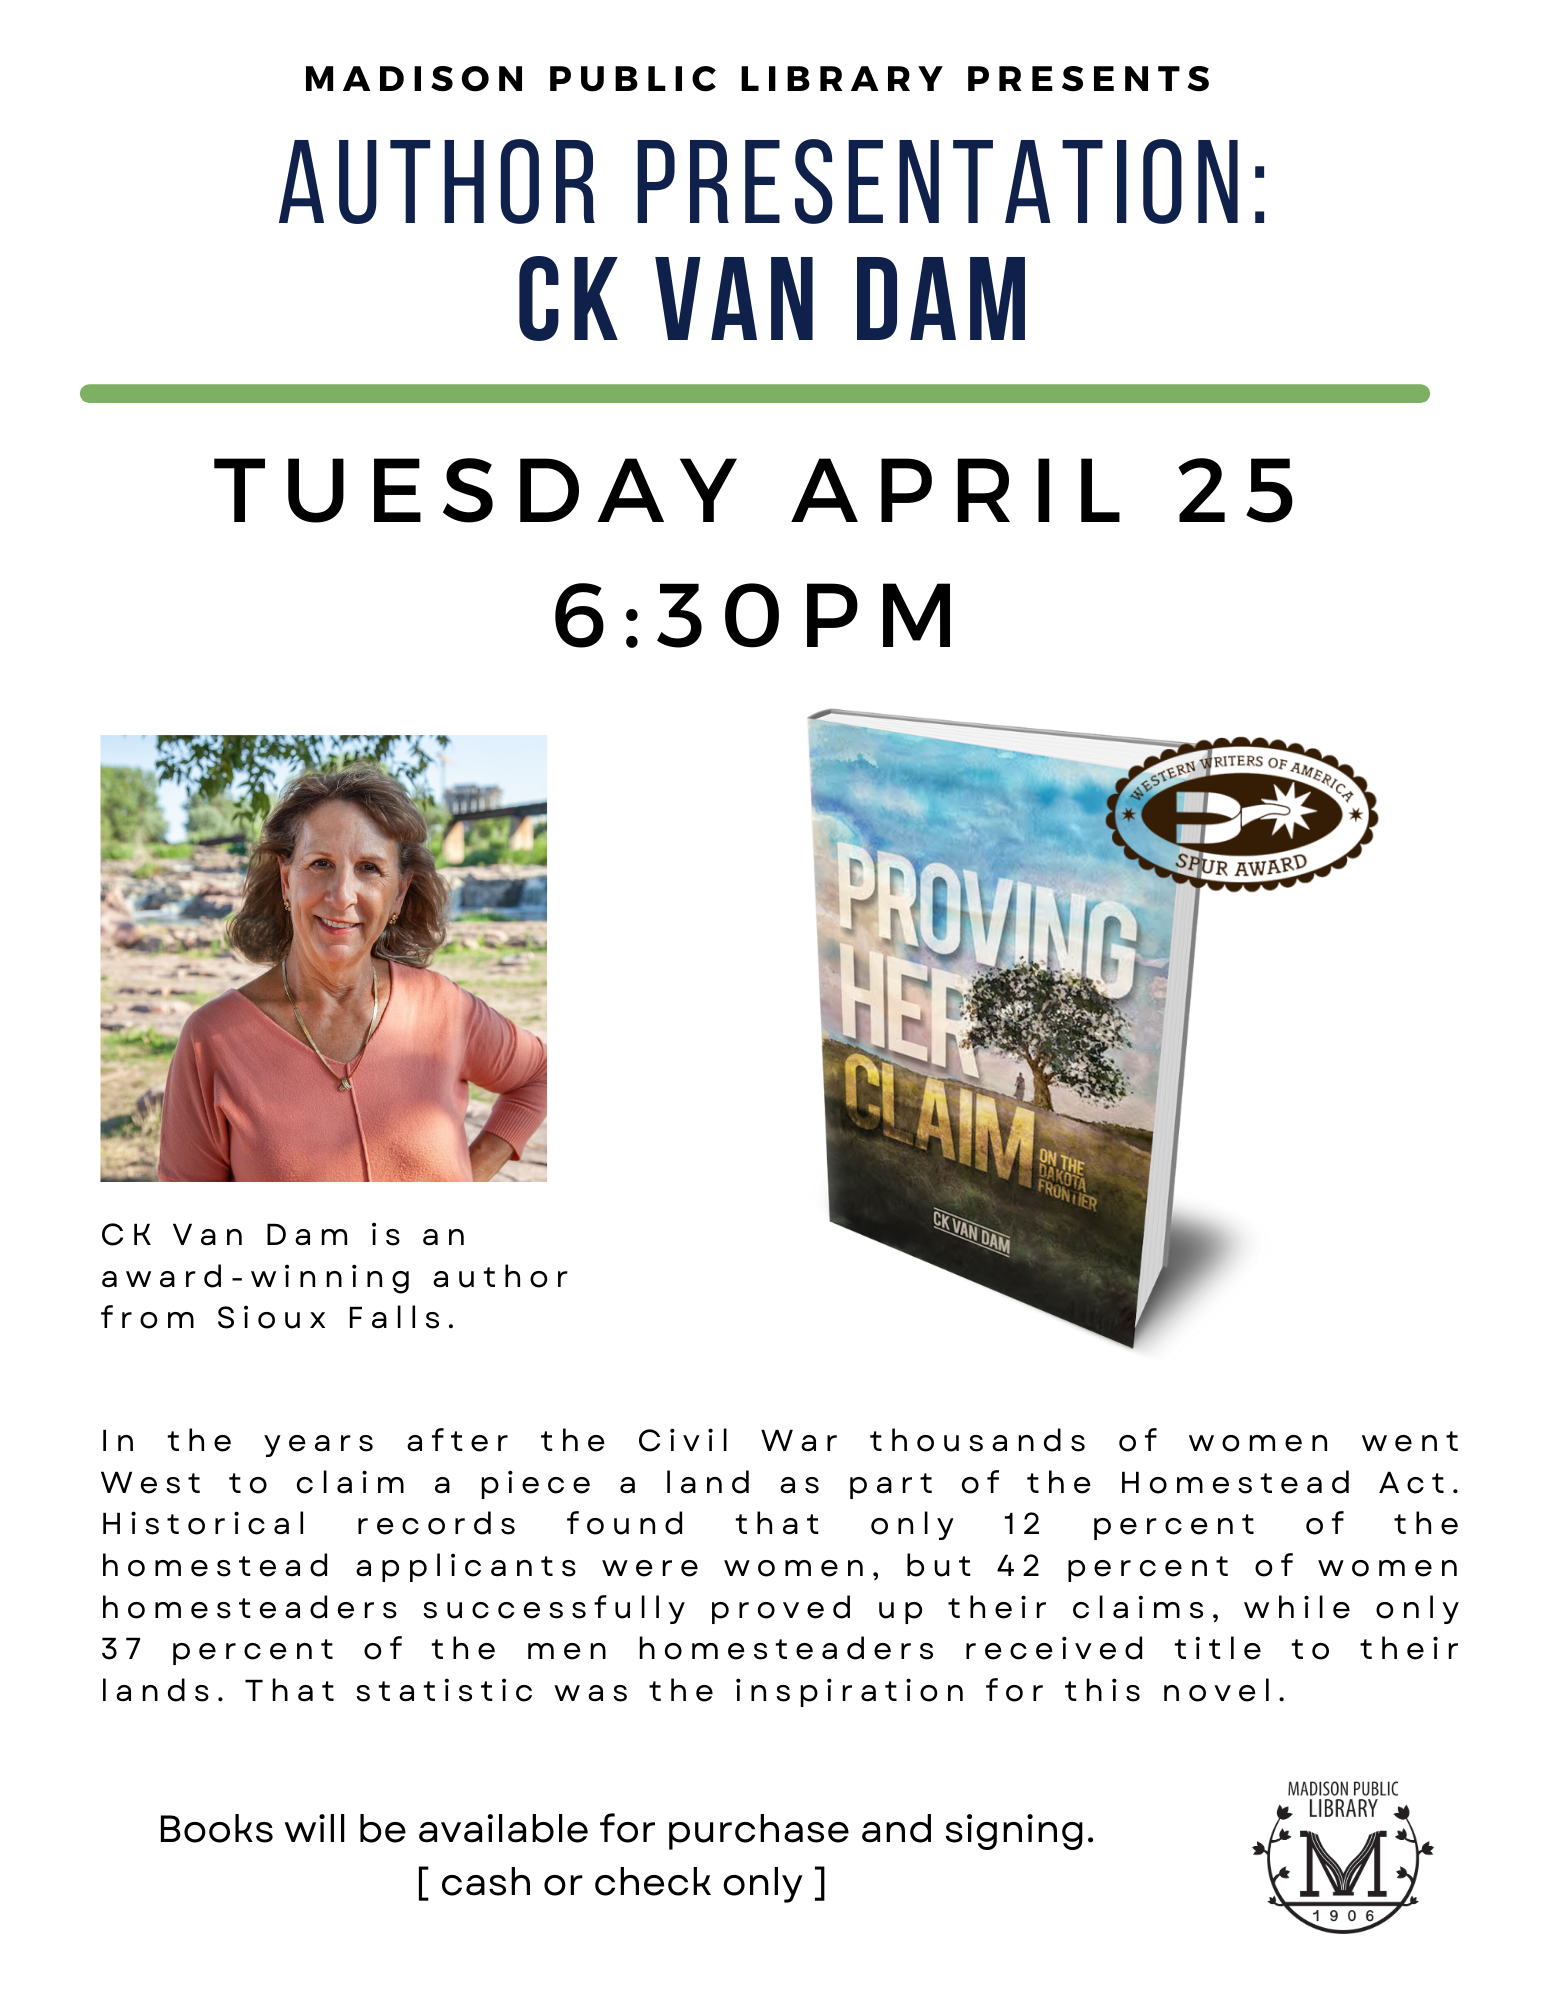 <h1 class="tribe-events-single-event-title">Author Presentation: CK Van Dam</h1>